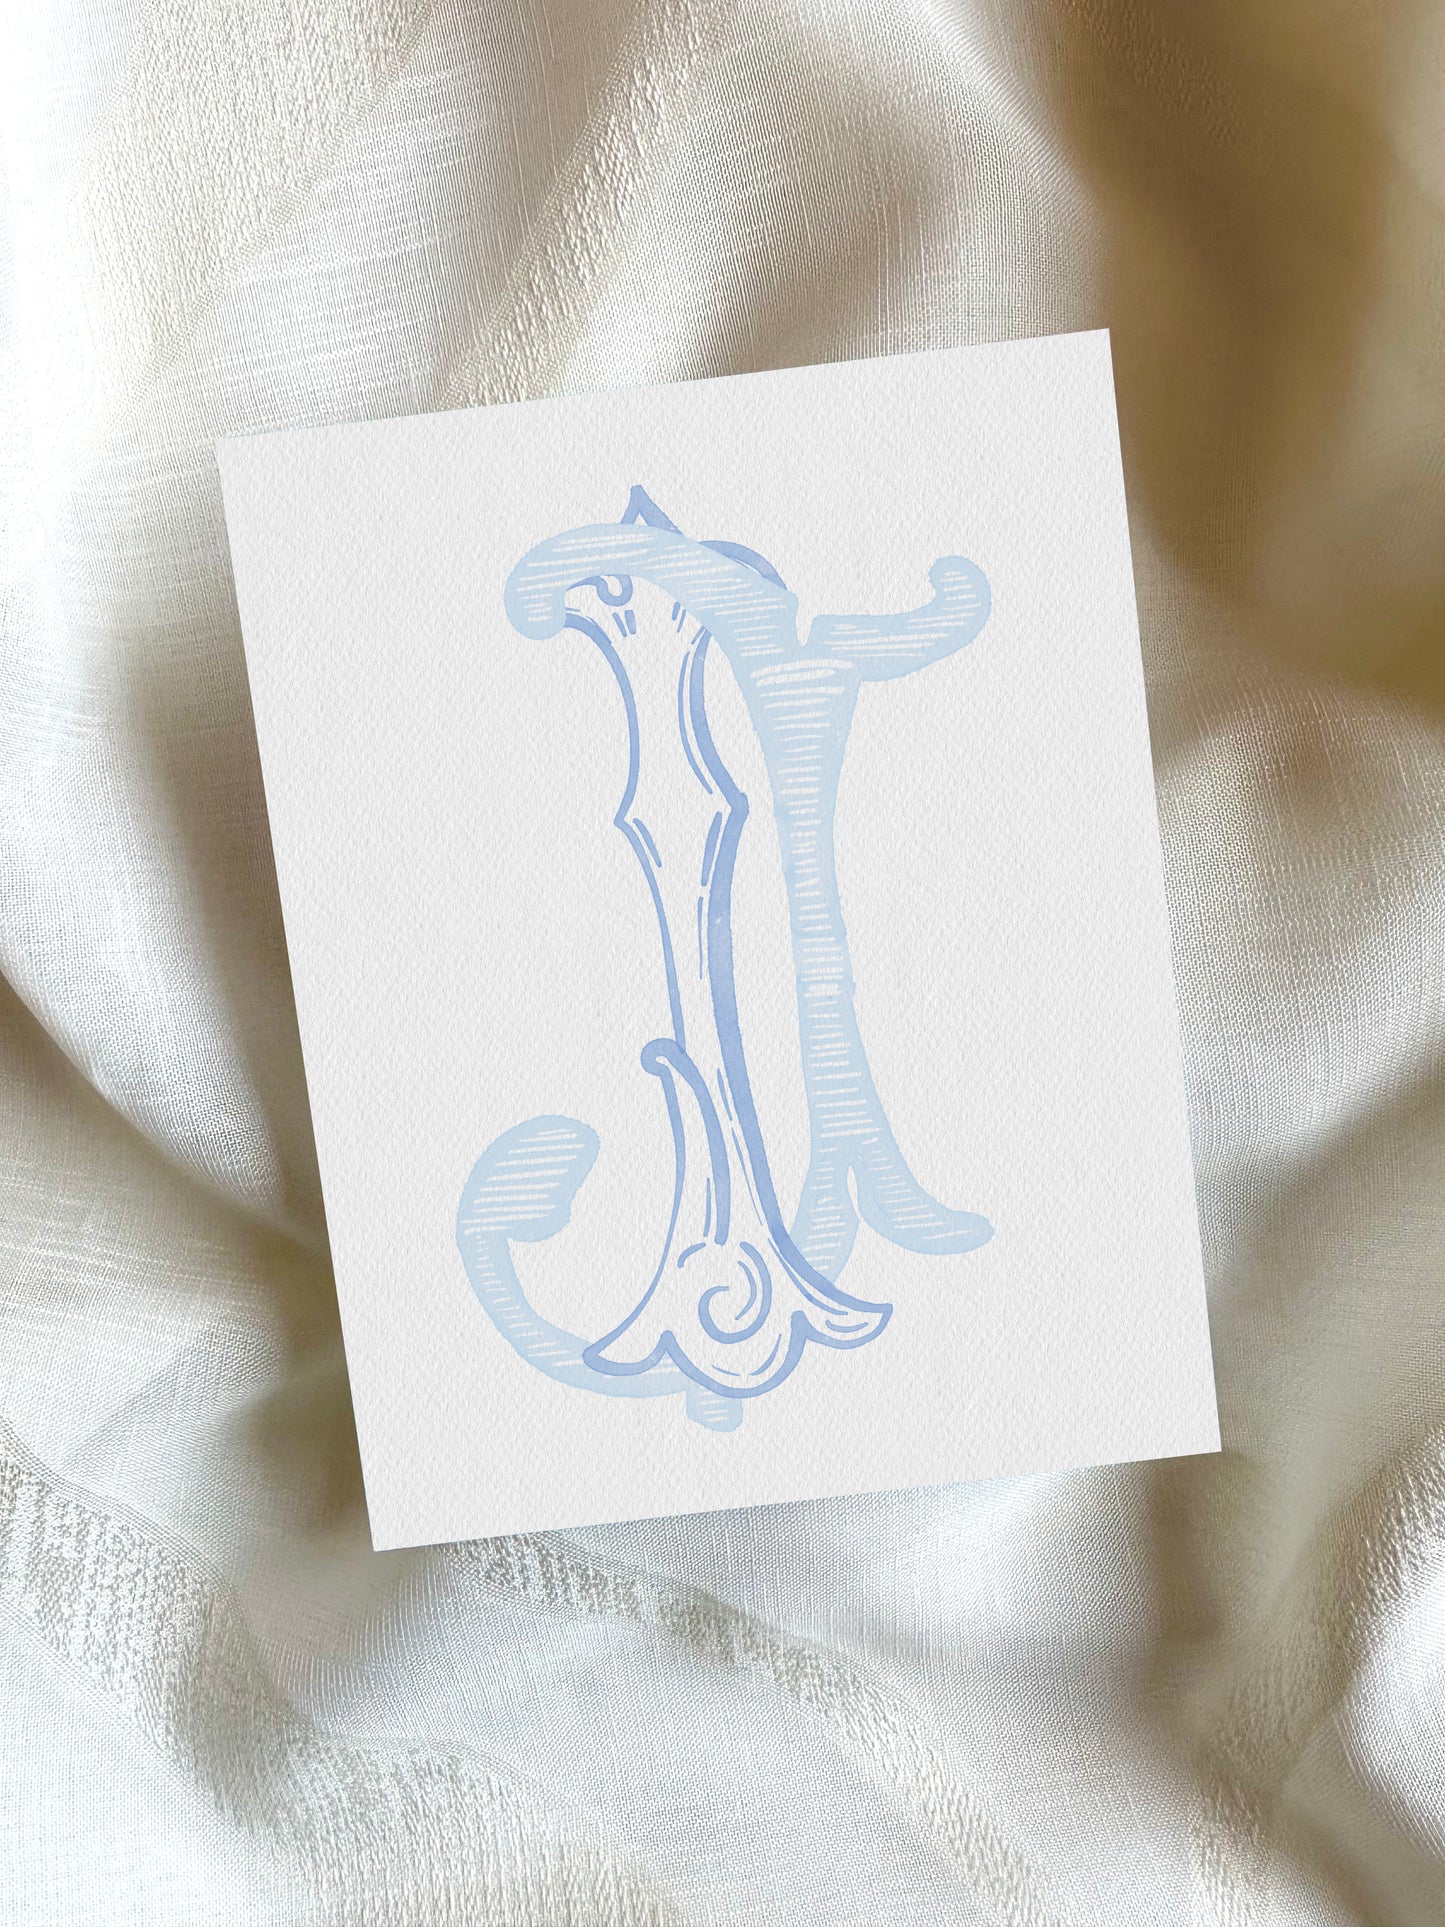 2 Letter Monogram with Letters JI IJ | Digital Download - Wedding Monogram SVG, Personal Logo, Wedding Logo for Wedding Invitations The Wedding Crest Lab